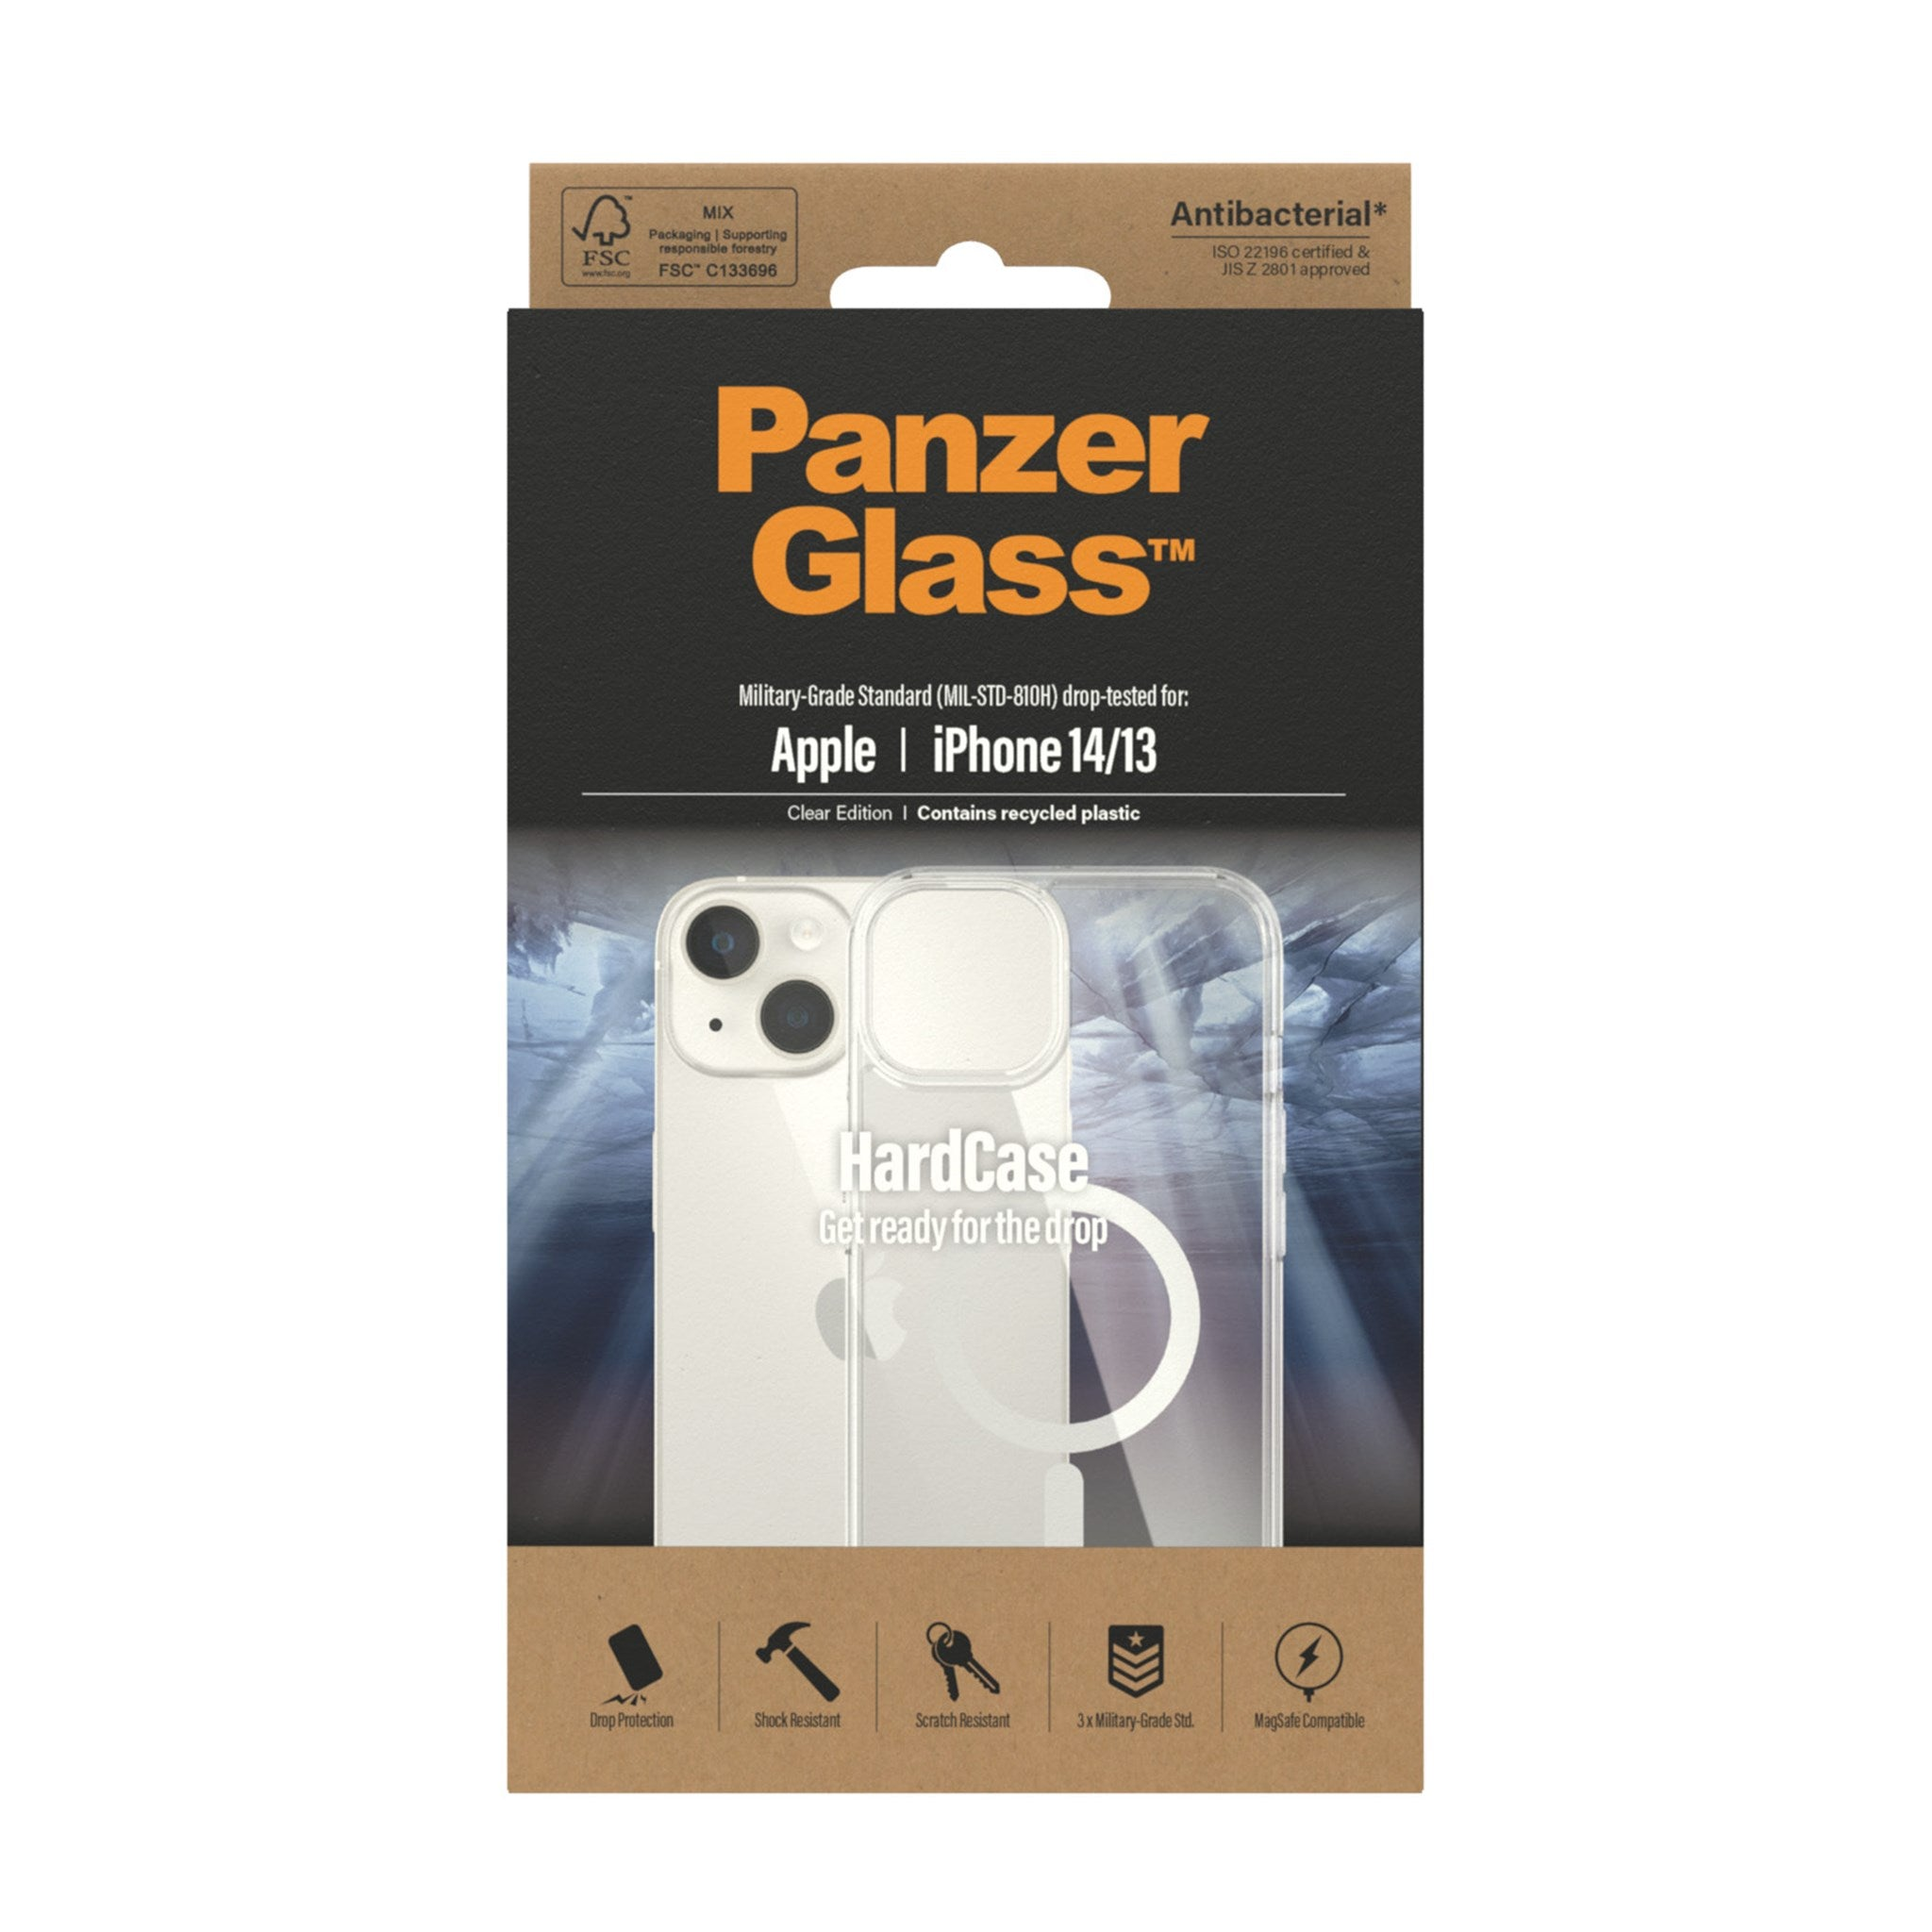 PANZERGLASS HardCase MagSafe, 13, Backcover, 14 iPhone Transparent Apple, | iPhone